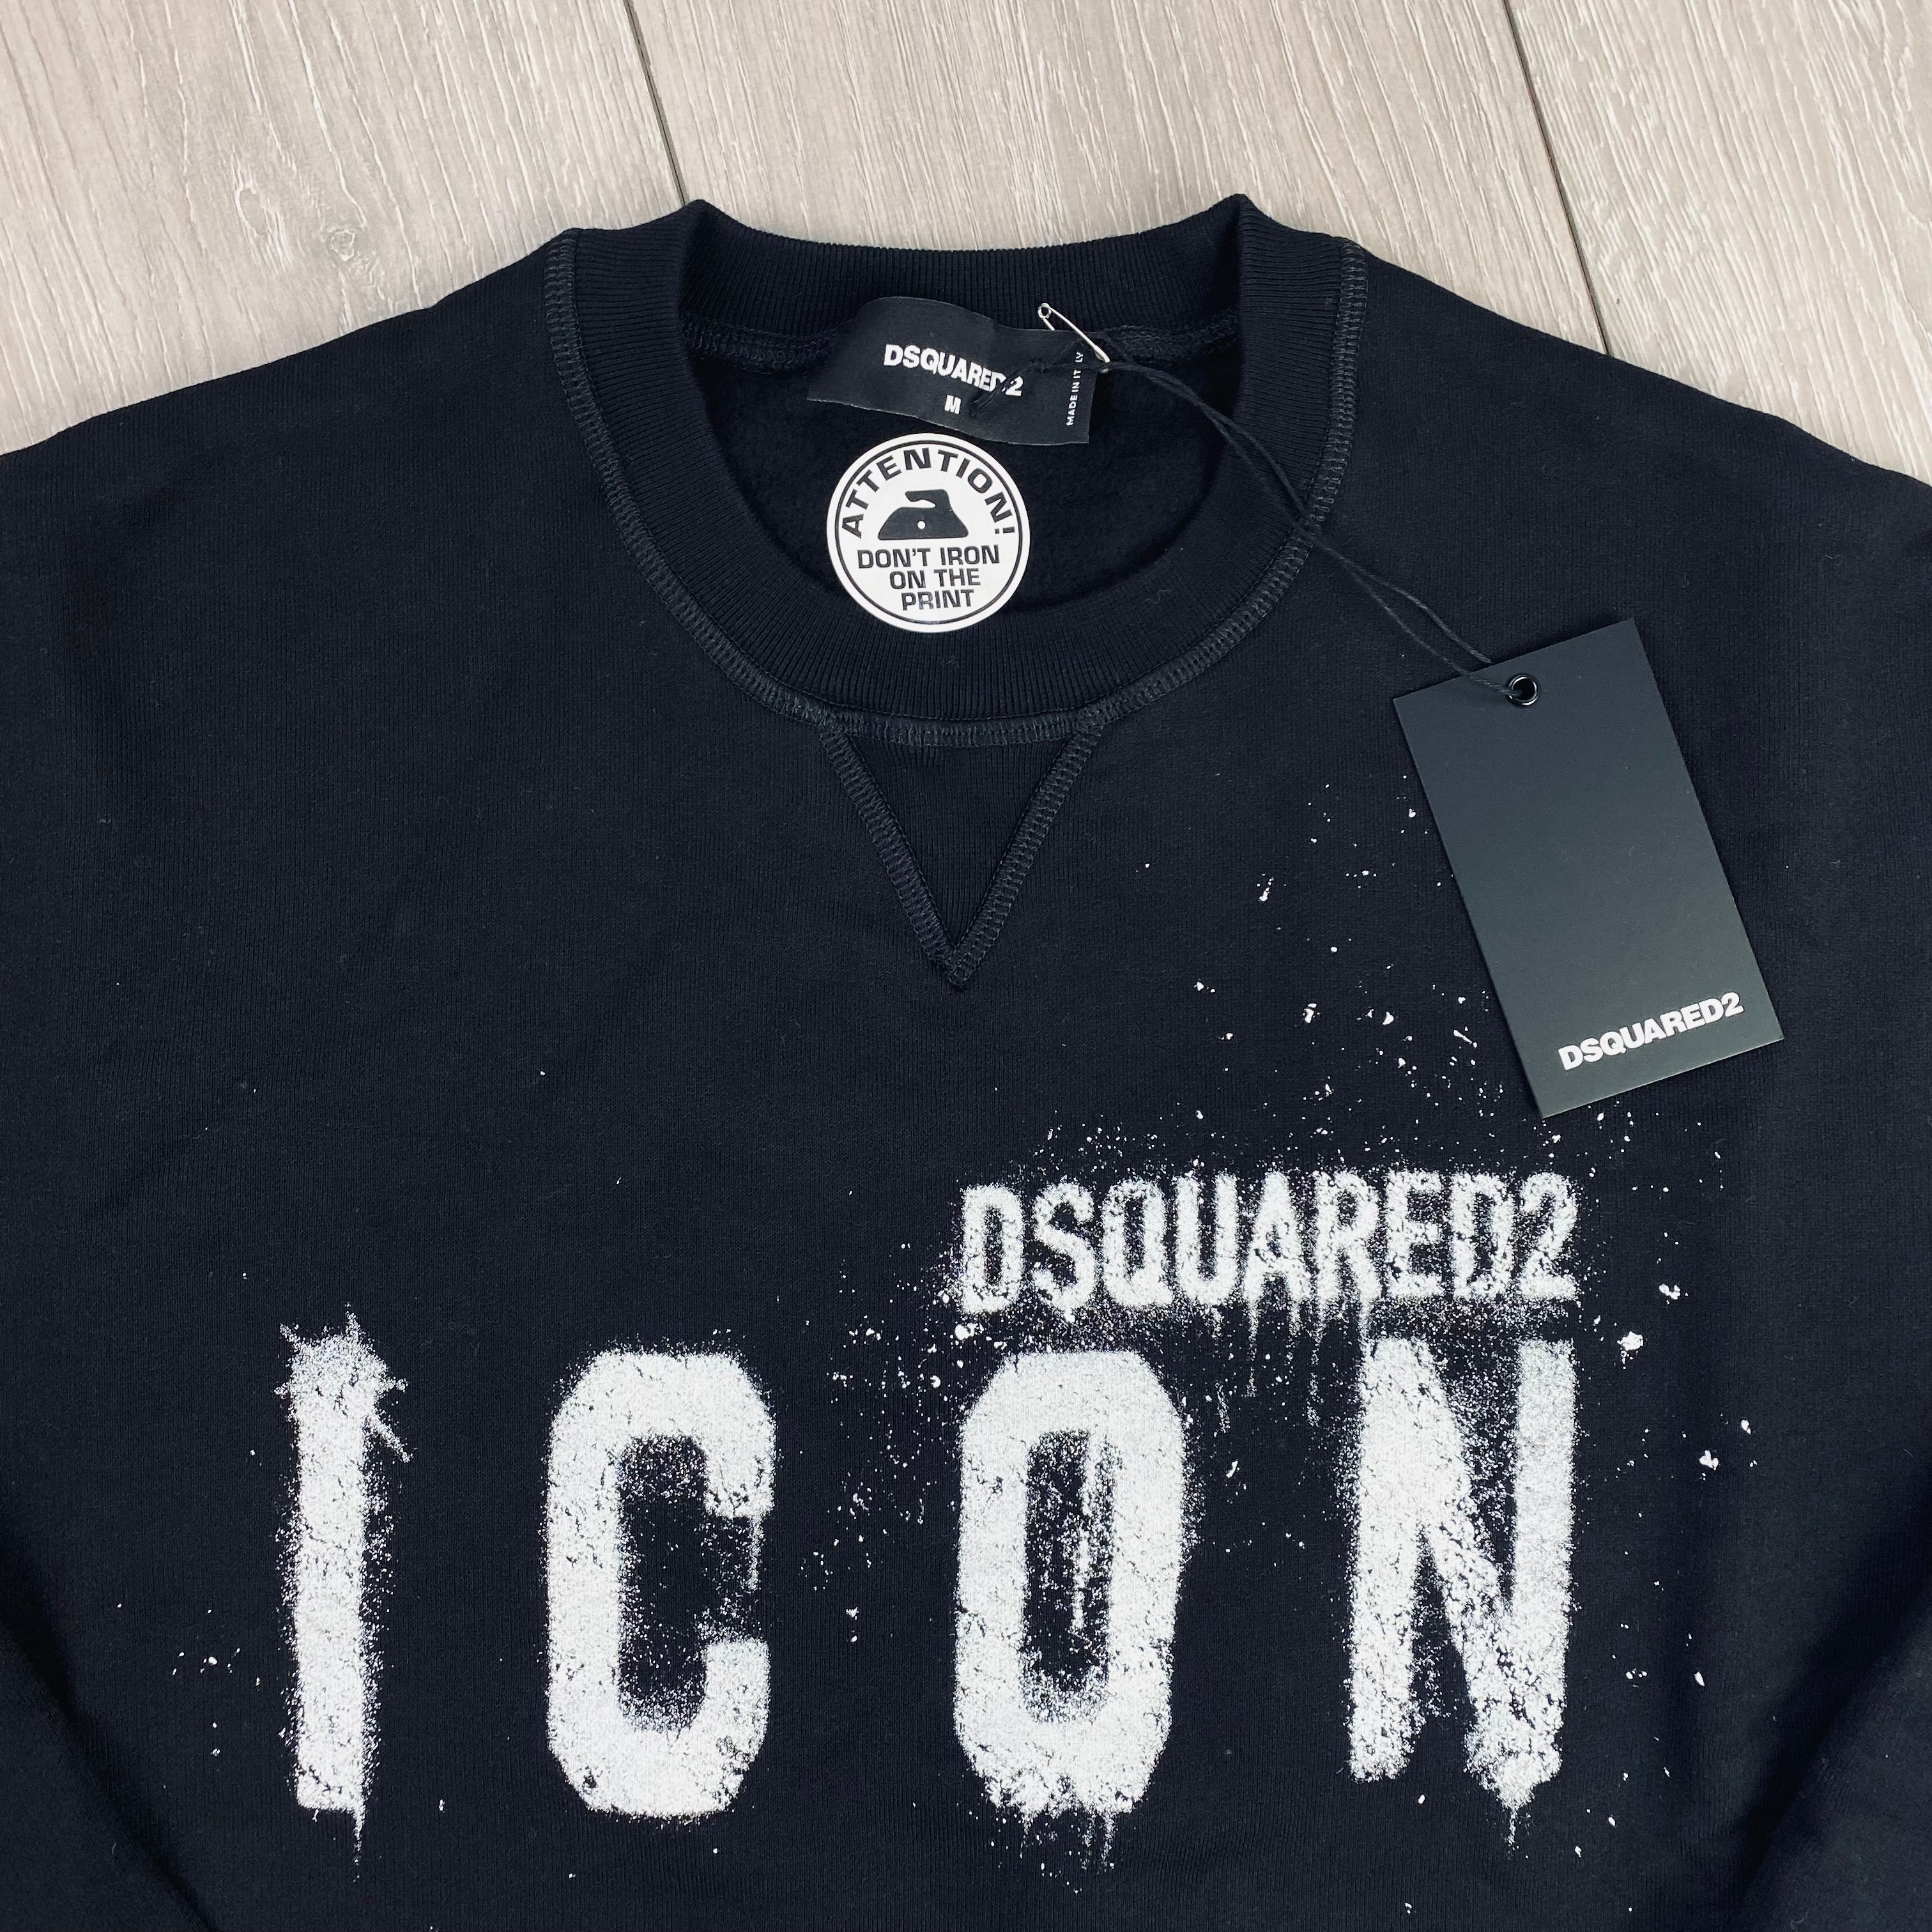 DSQUARED2 ICON Sweatshirt